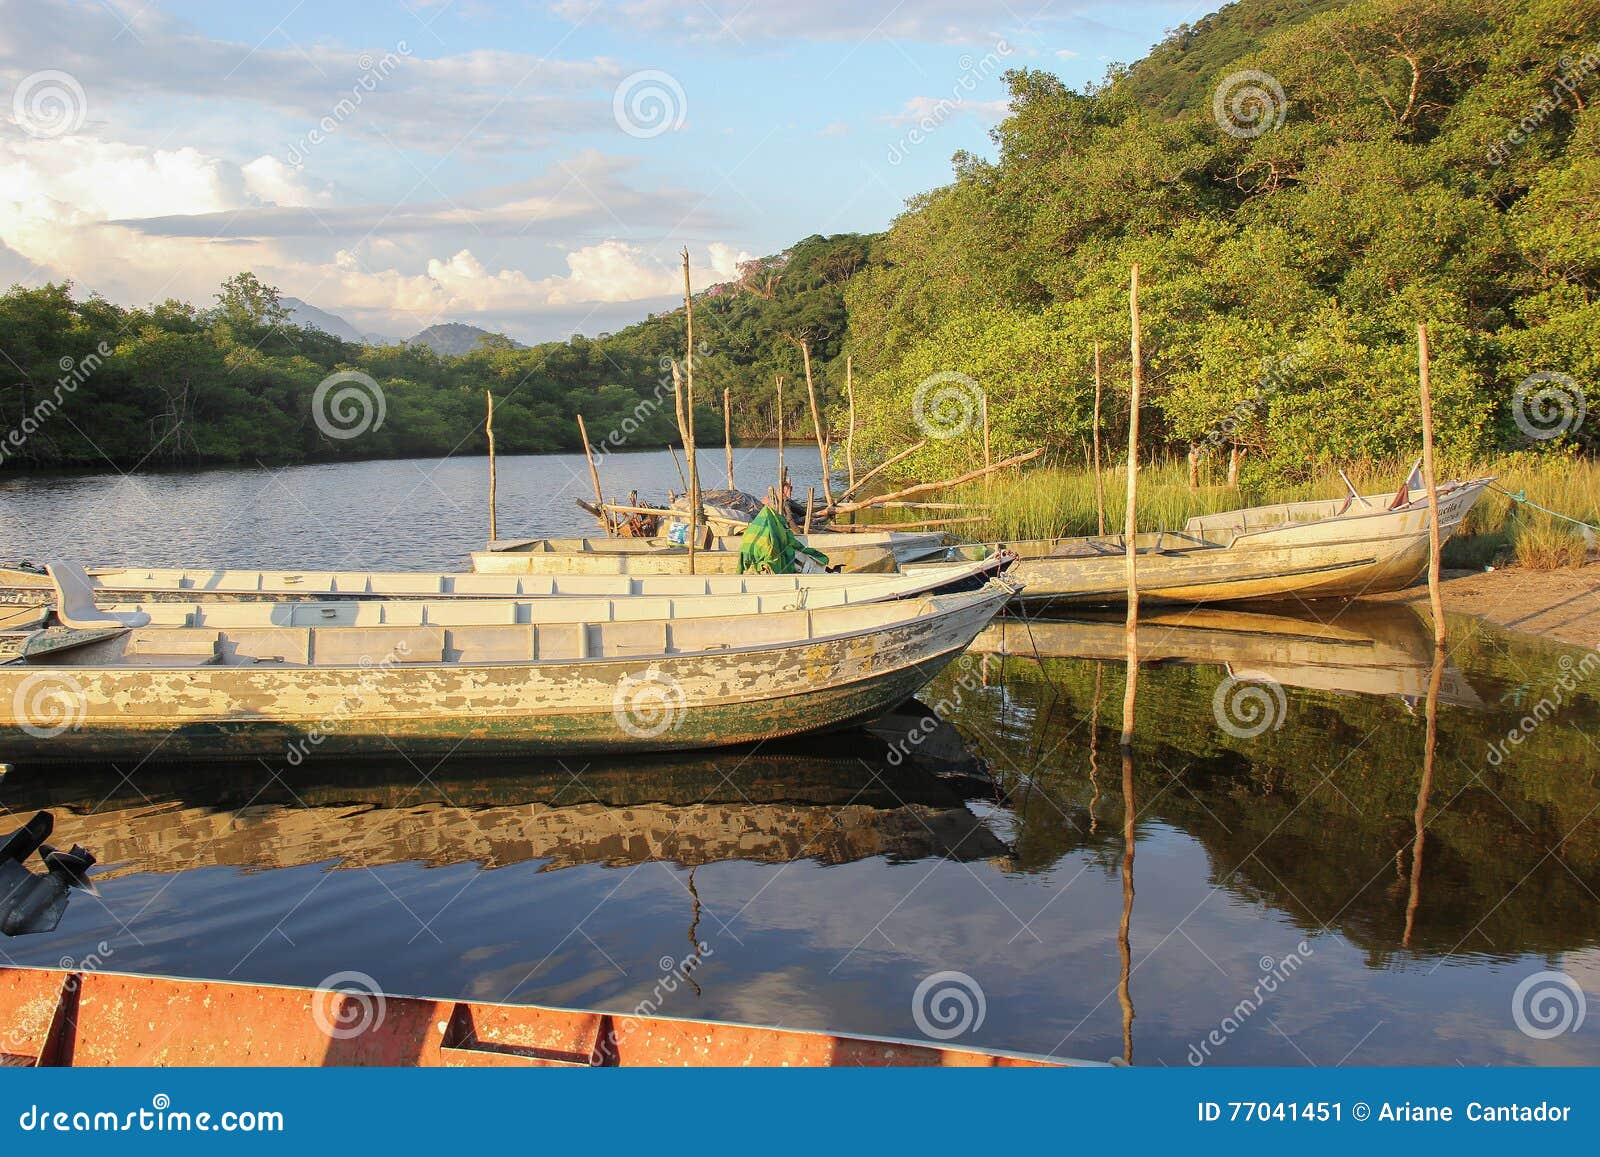 fishing boat, canoa de pesca. background.